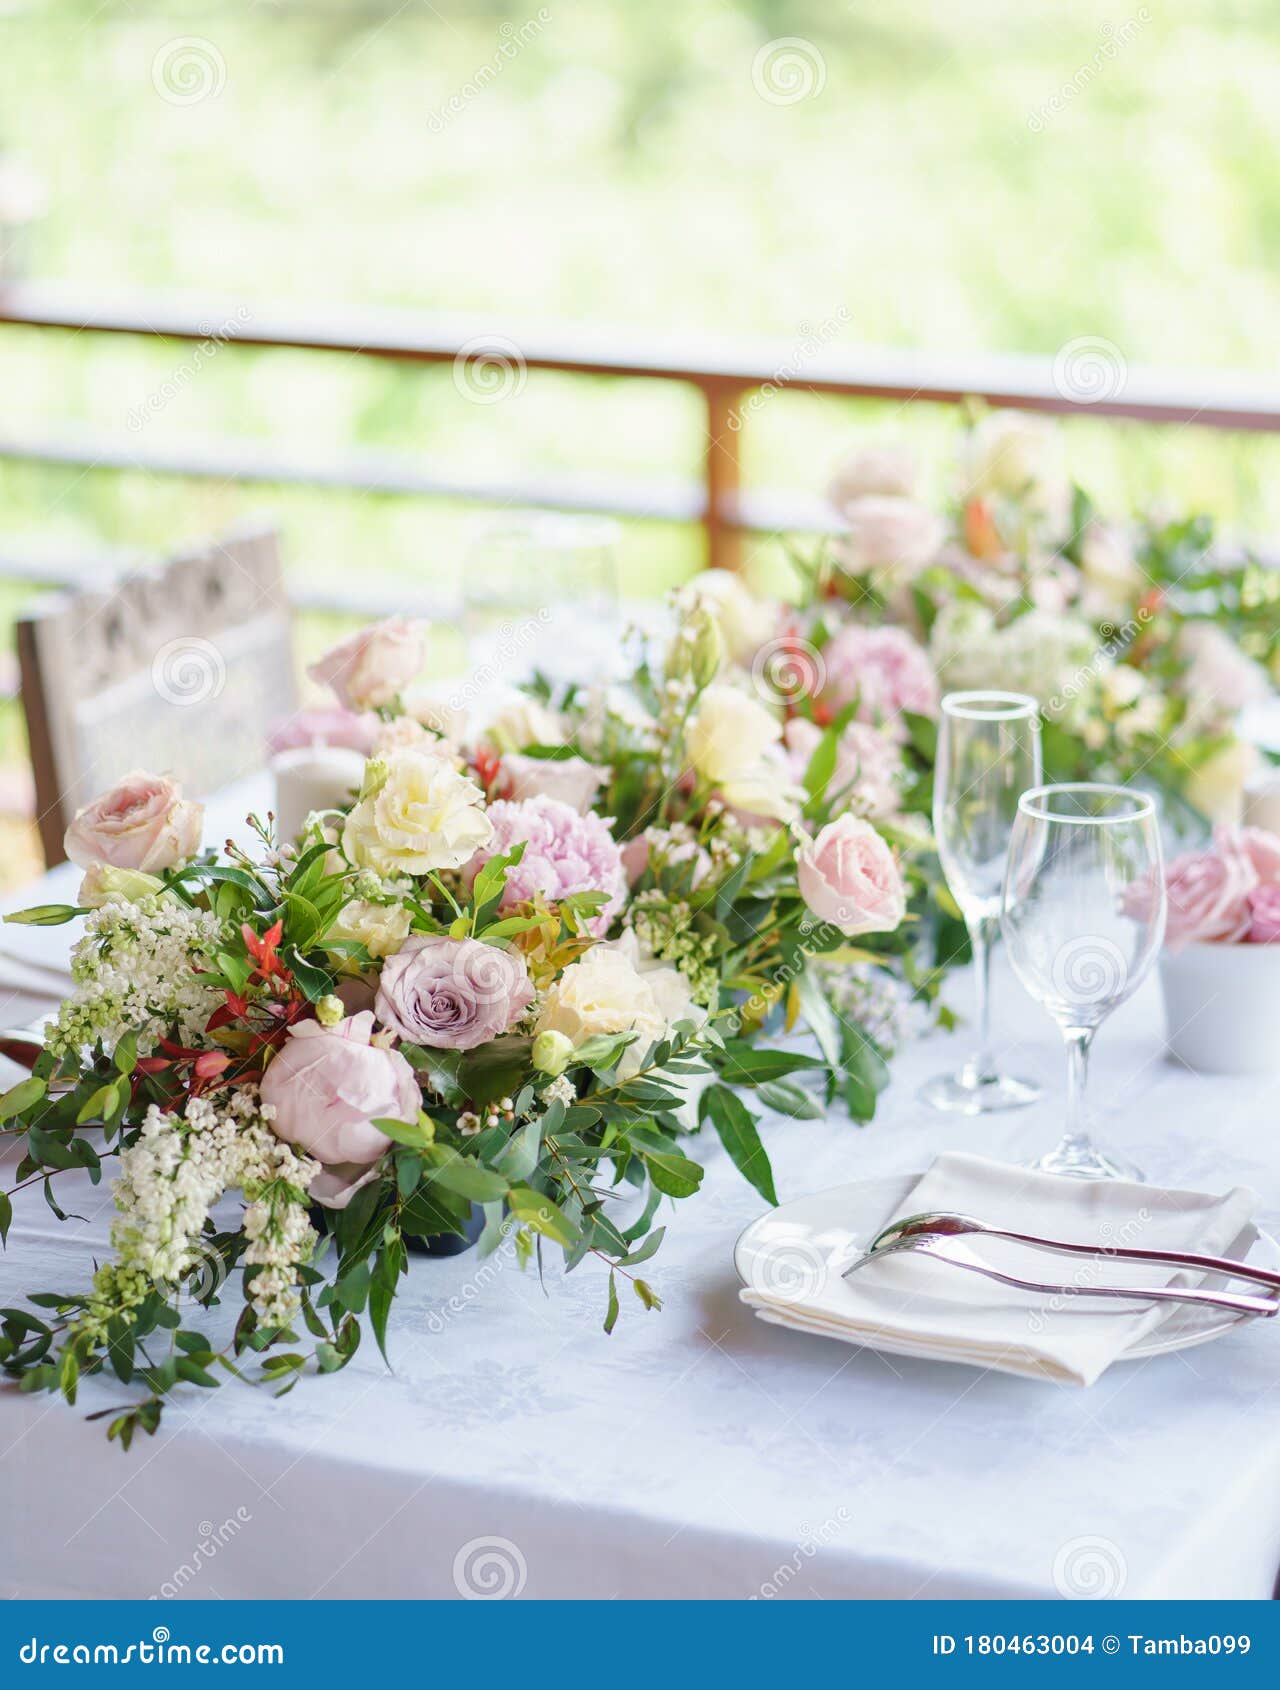 Details about   S4Sassy Leaves & Ranunculus Floral Room Tablemats With Napkins set-FL-840C 